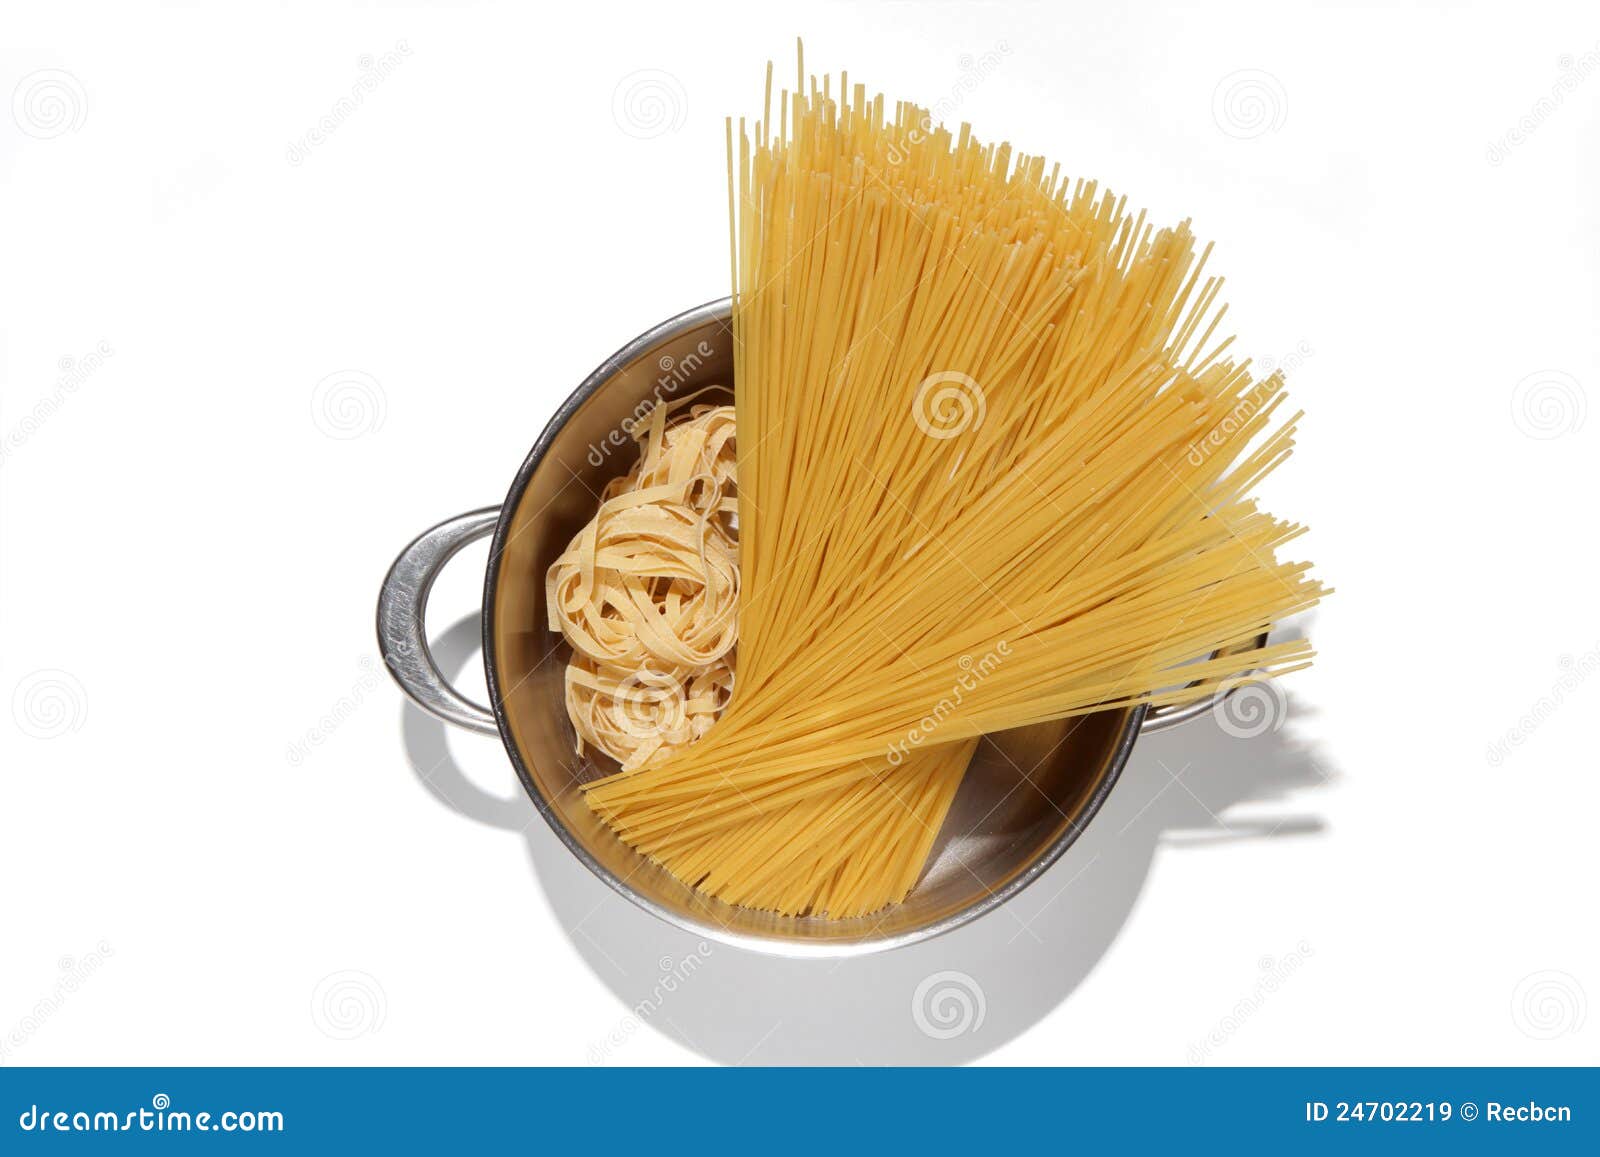 pasta in the pot